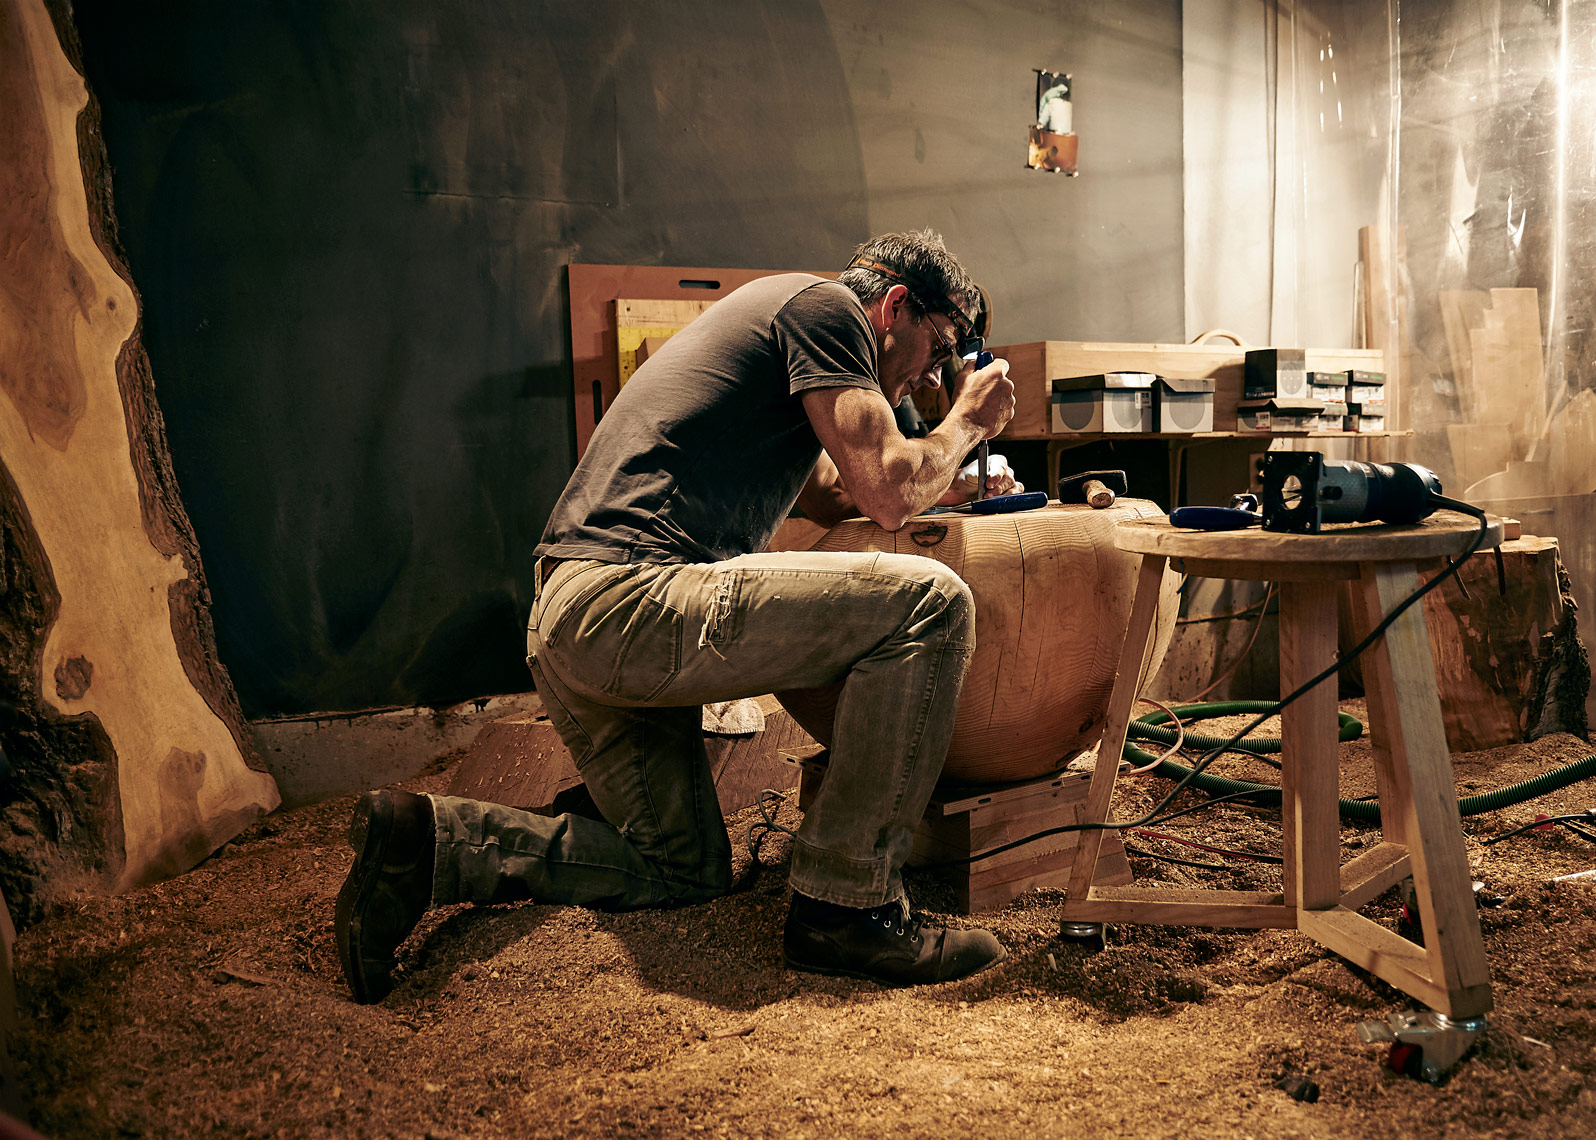 Artist Photographer Amos Morgan captures woodcarving artist at work